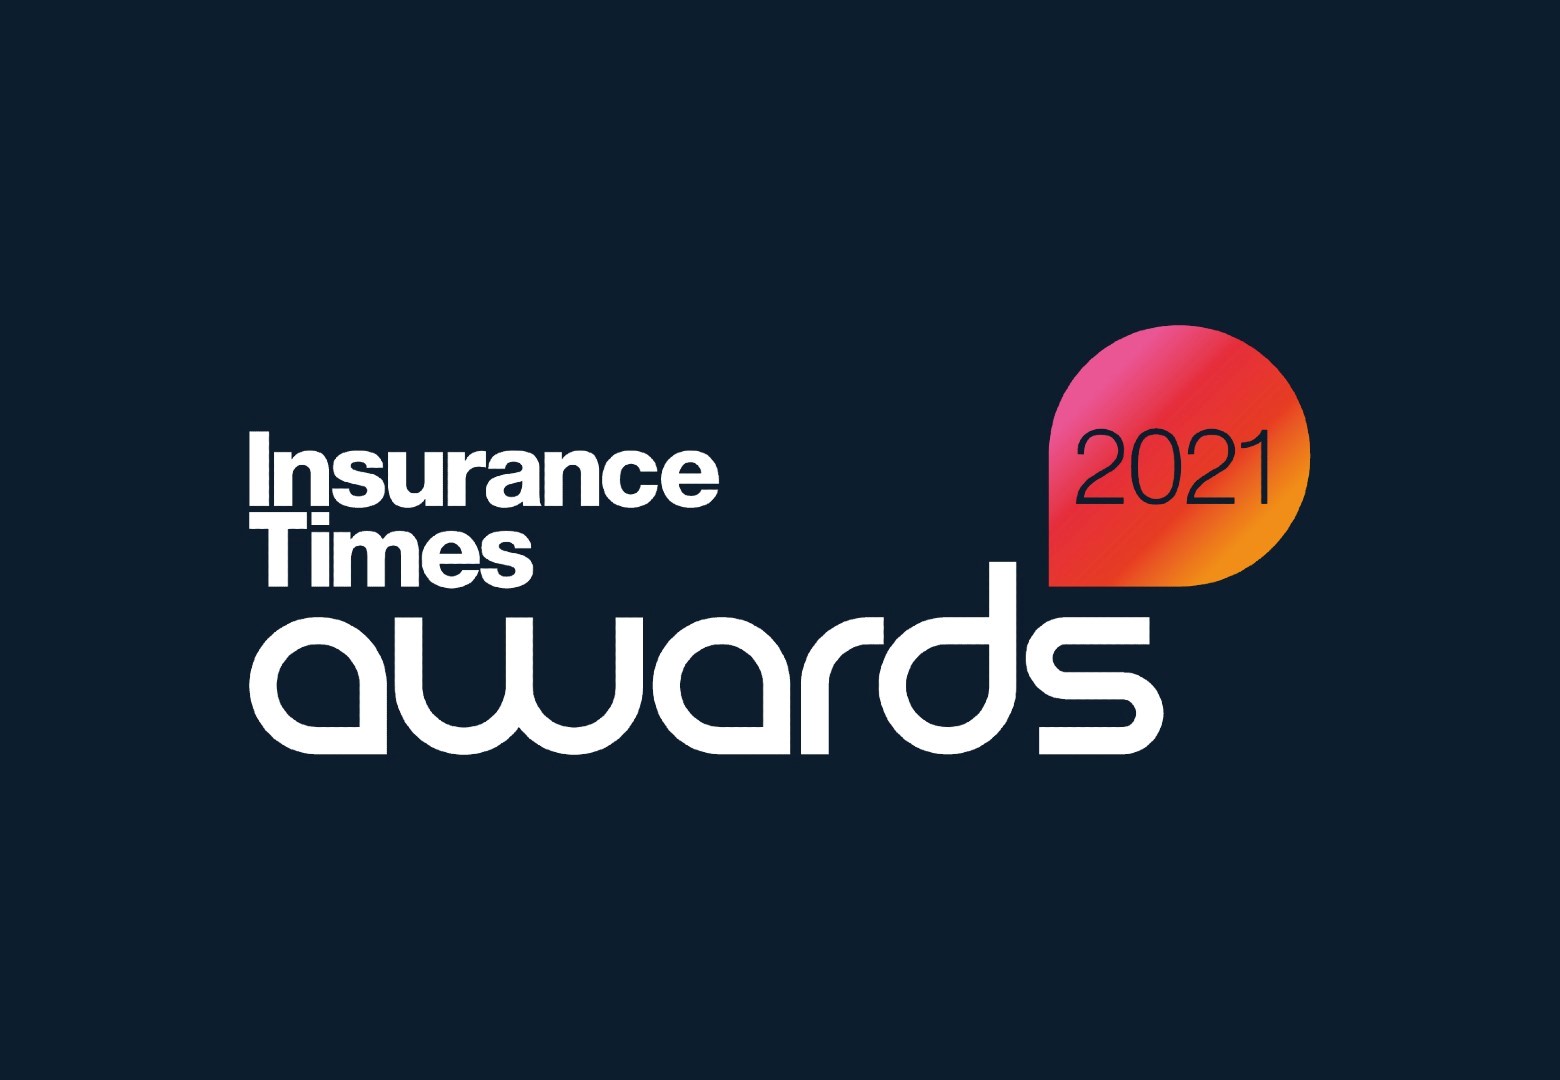 Insurance Times Awards logo.